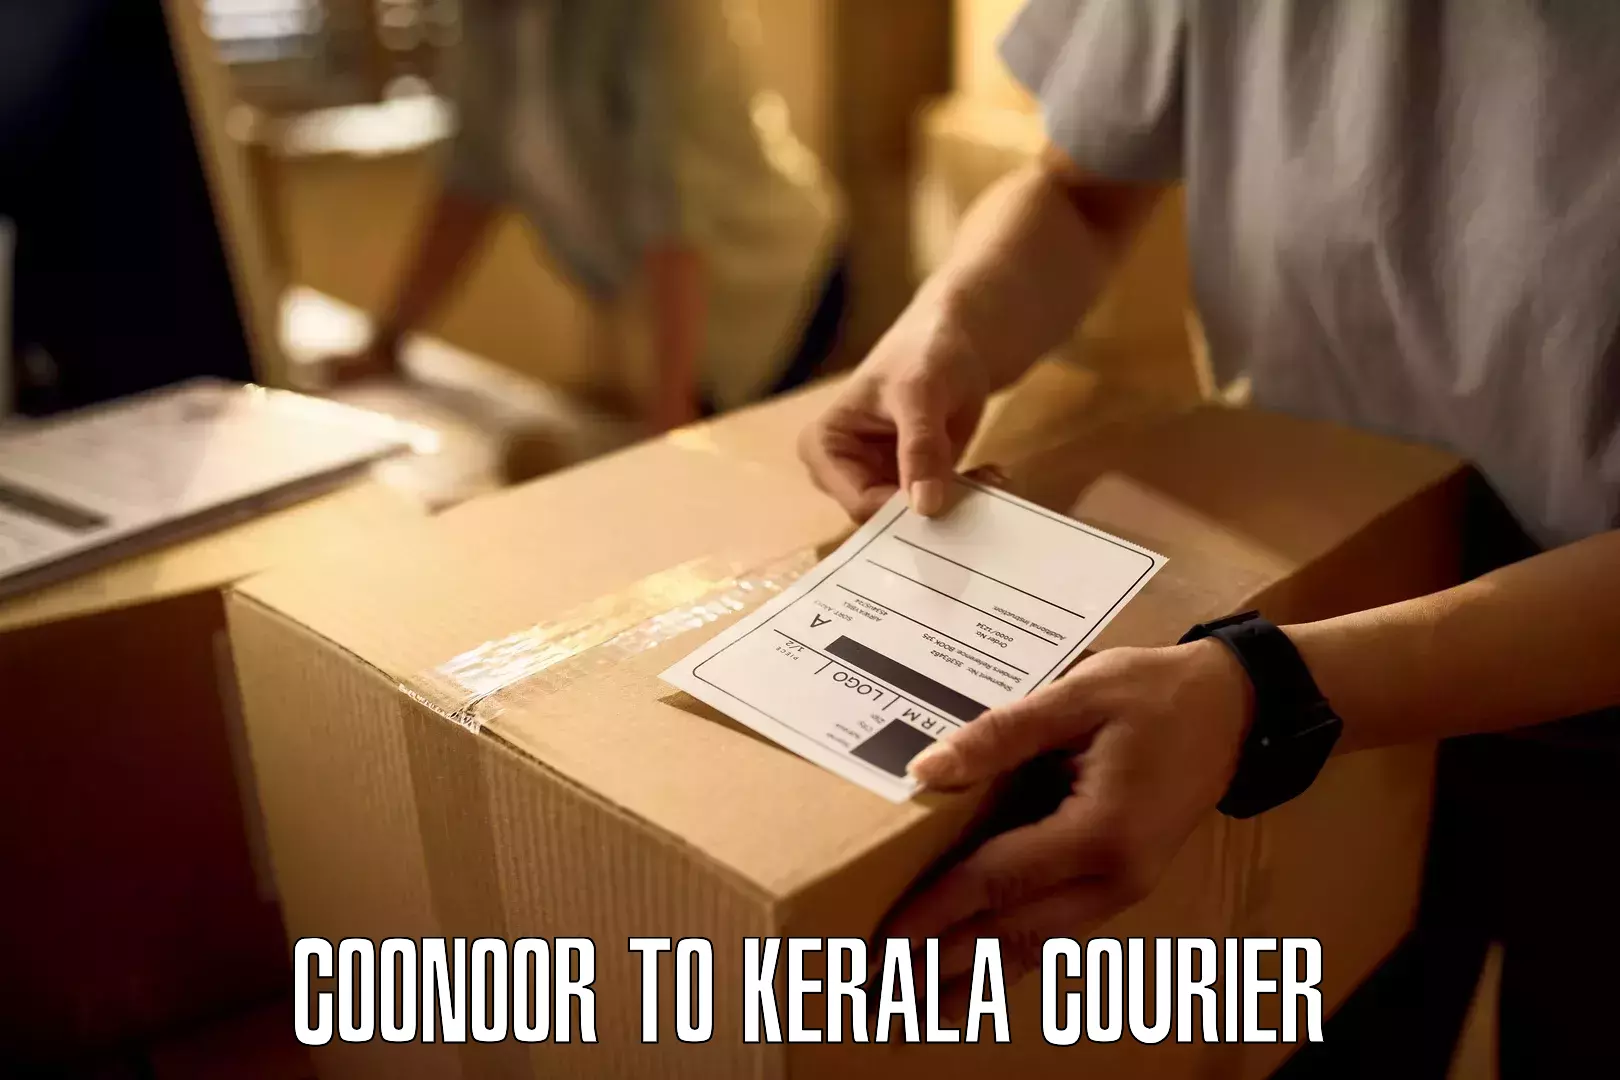 Domestic courier Coonoor to Kottayam